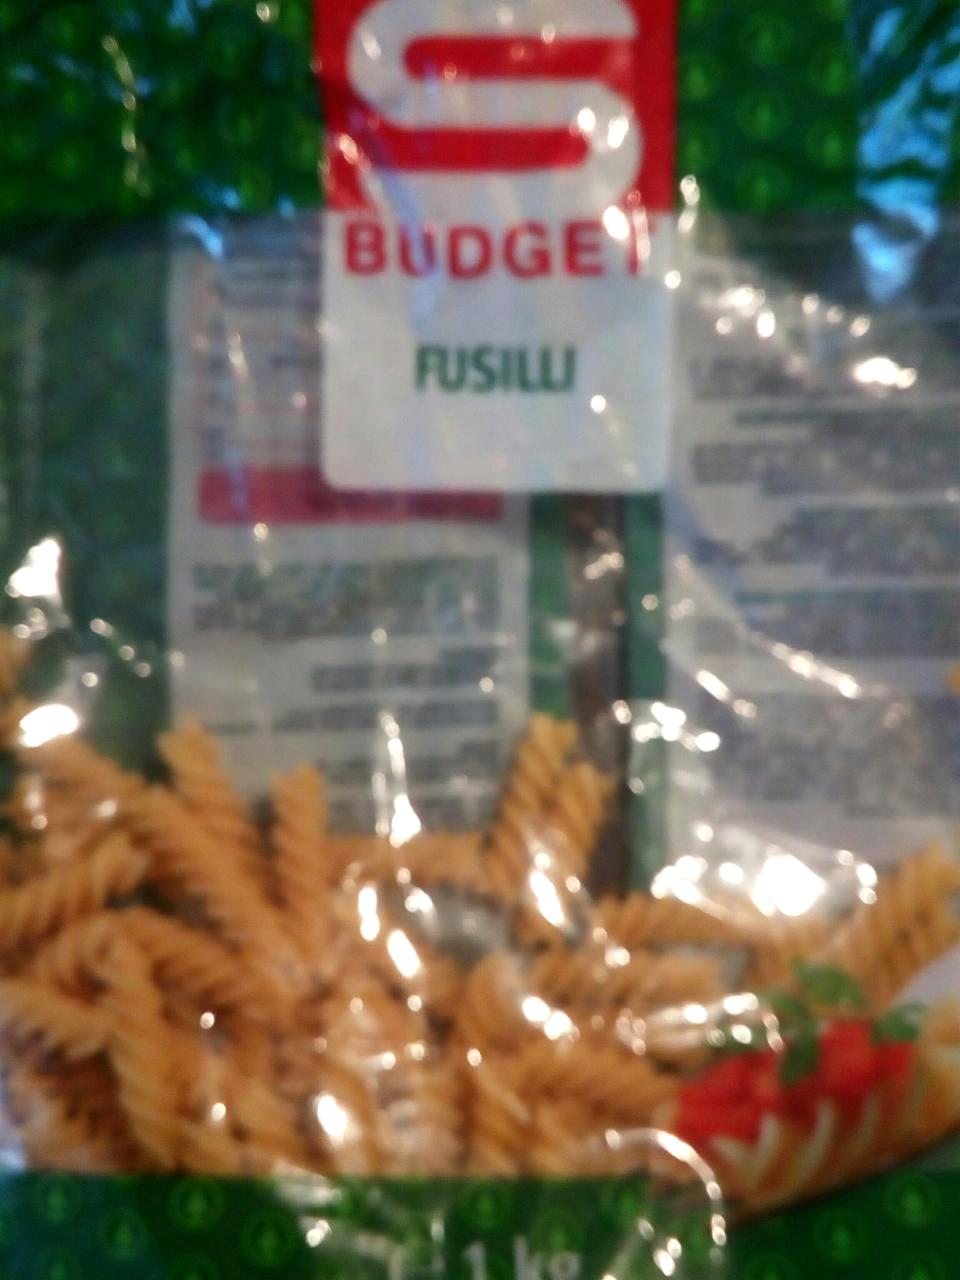 Fotografie - Fusilli budget spar